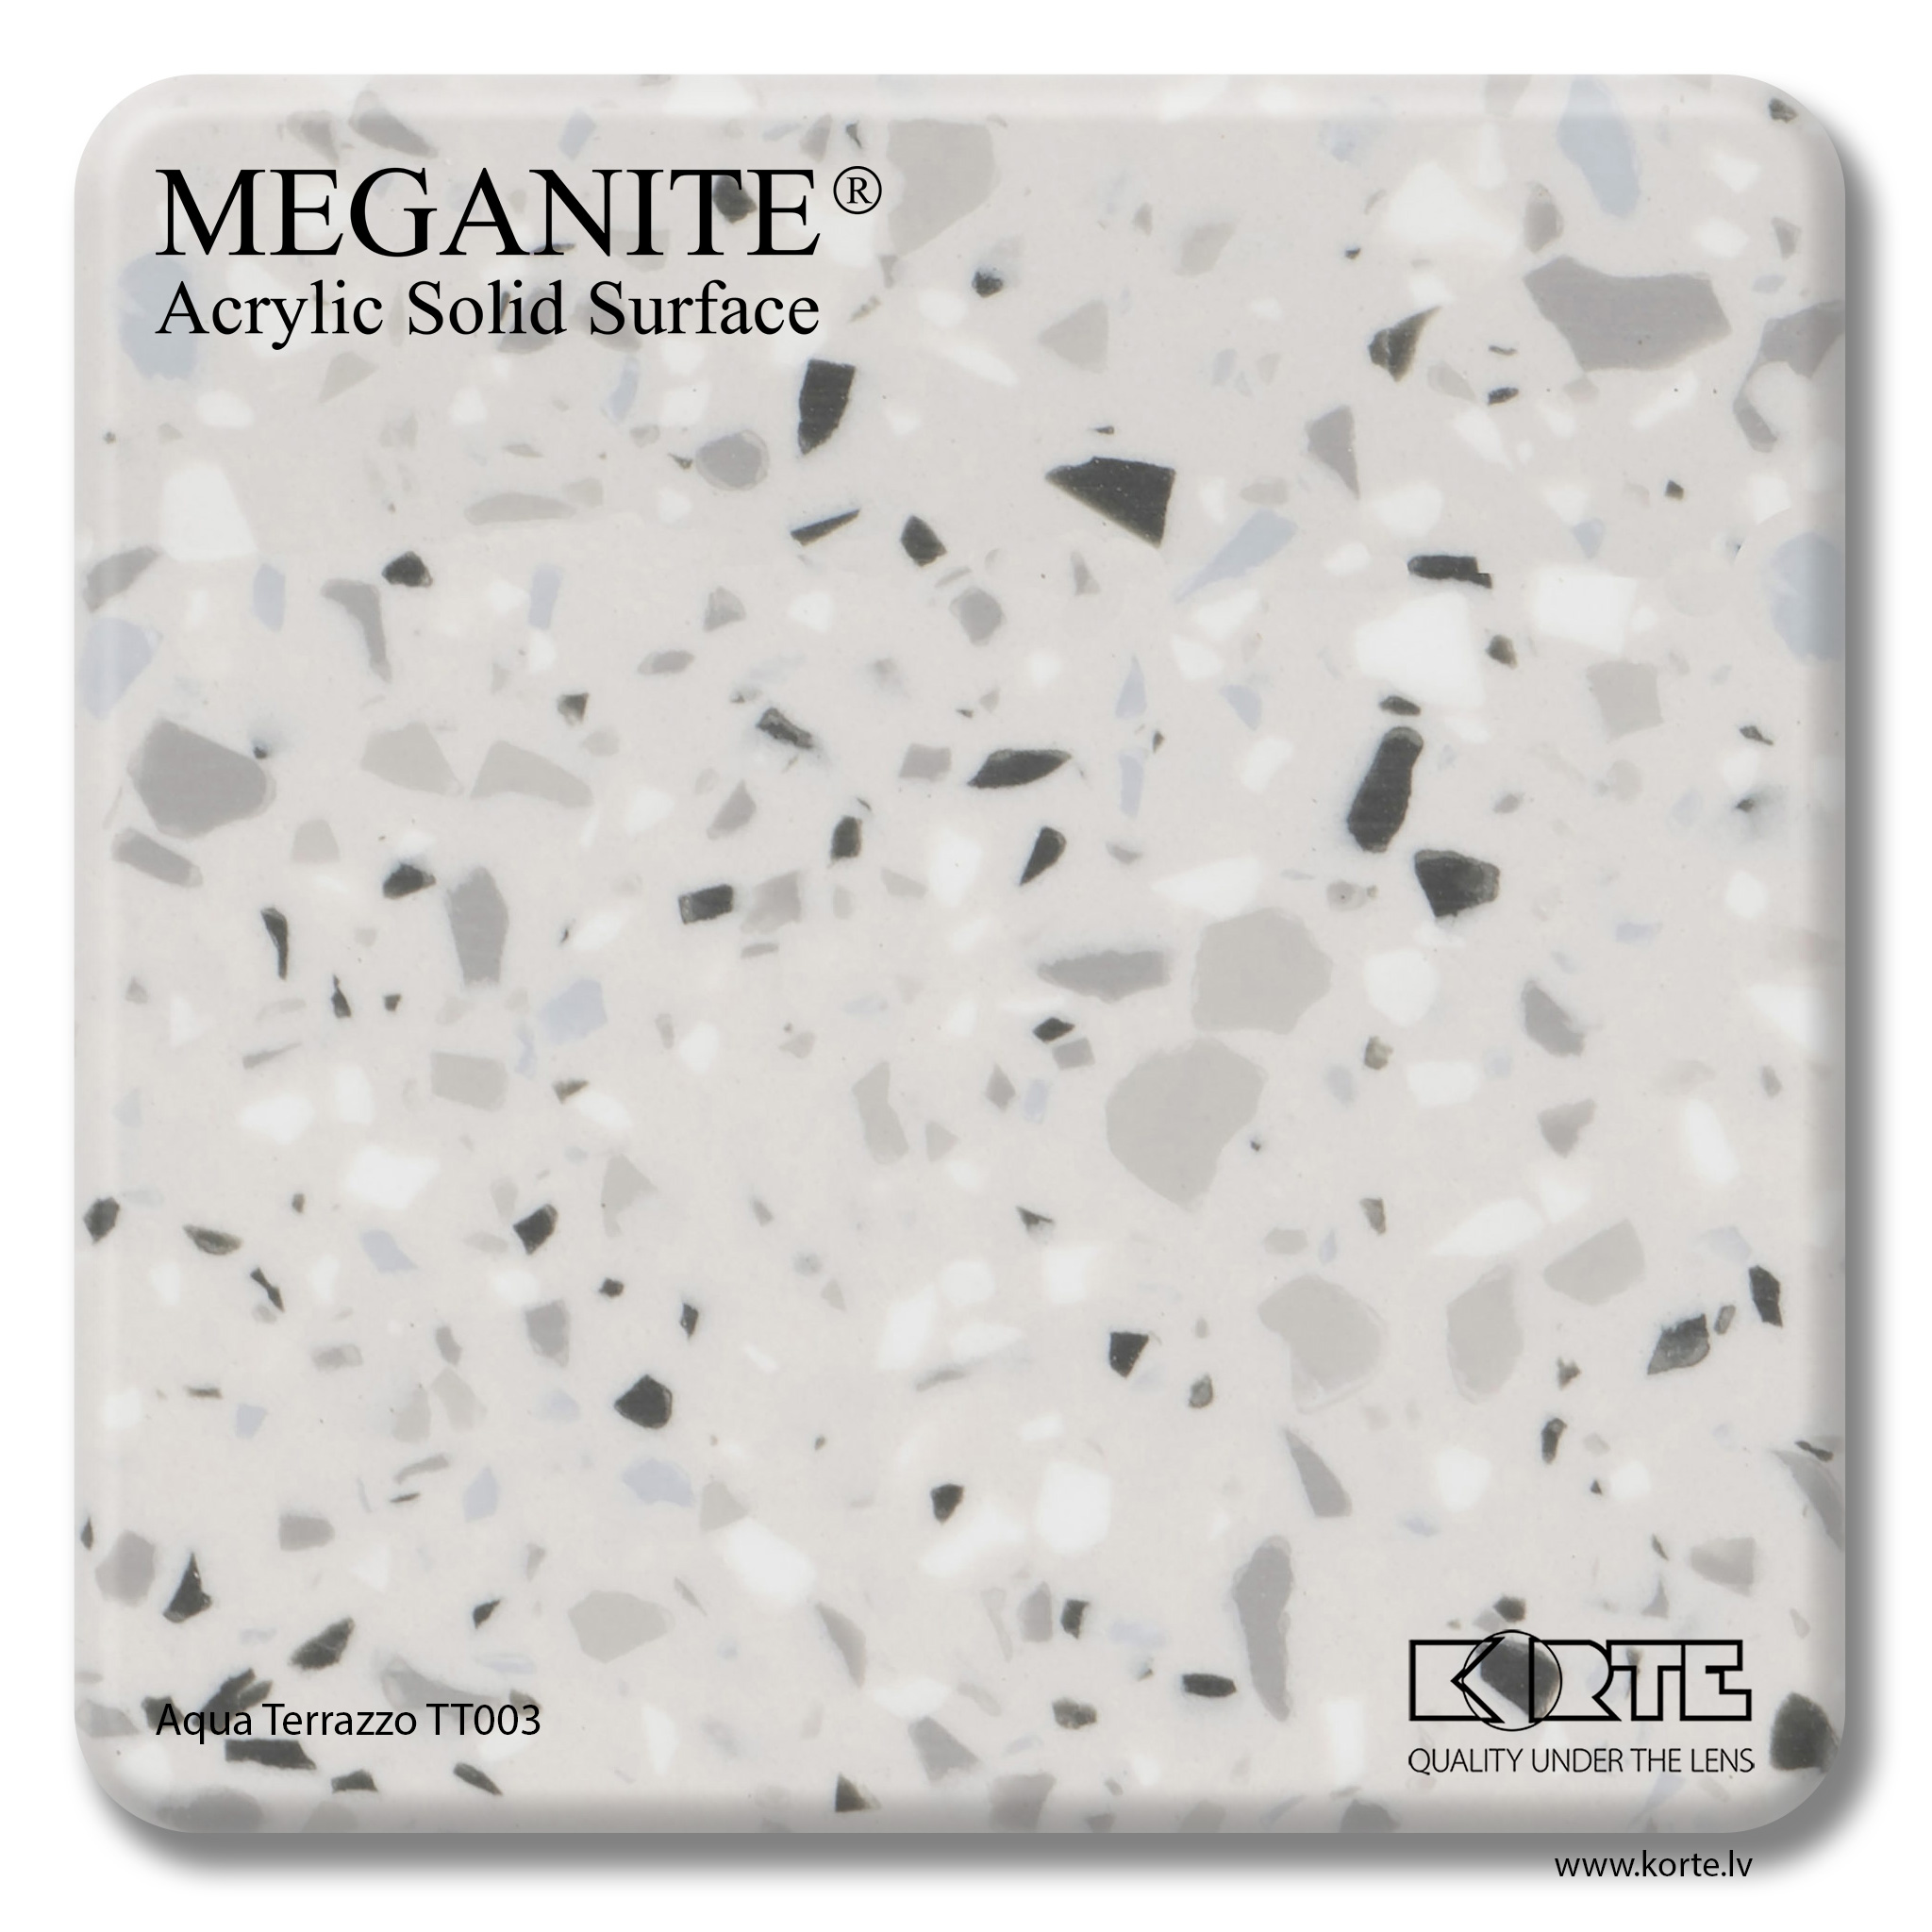 Meganite Aqua Terrazzo TT003